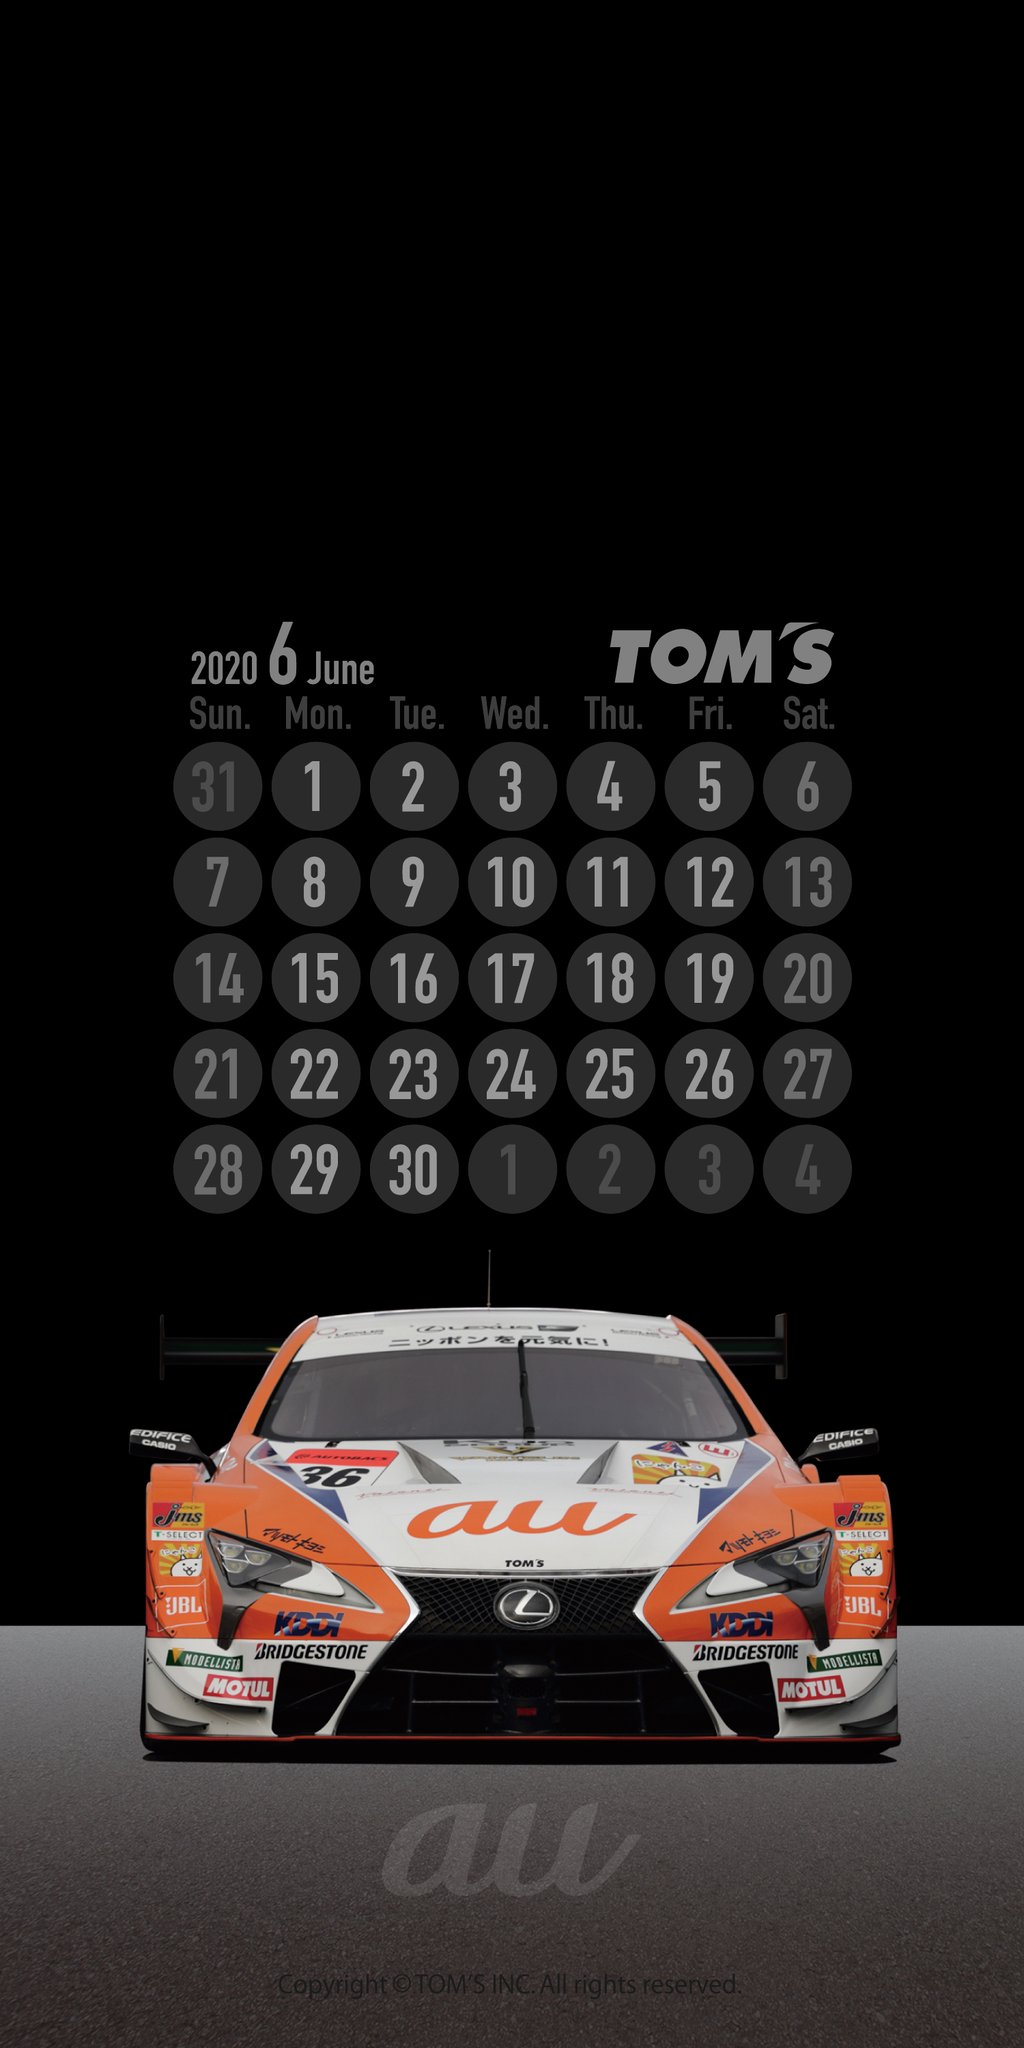 Tom S Racing 本日の ロック画面 カレンダー Lexus Au Team Tom S Au Tom S Lc500 Tomsracing 壁紙 Au Supergt Lexus 6月